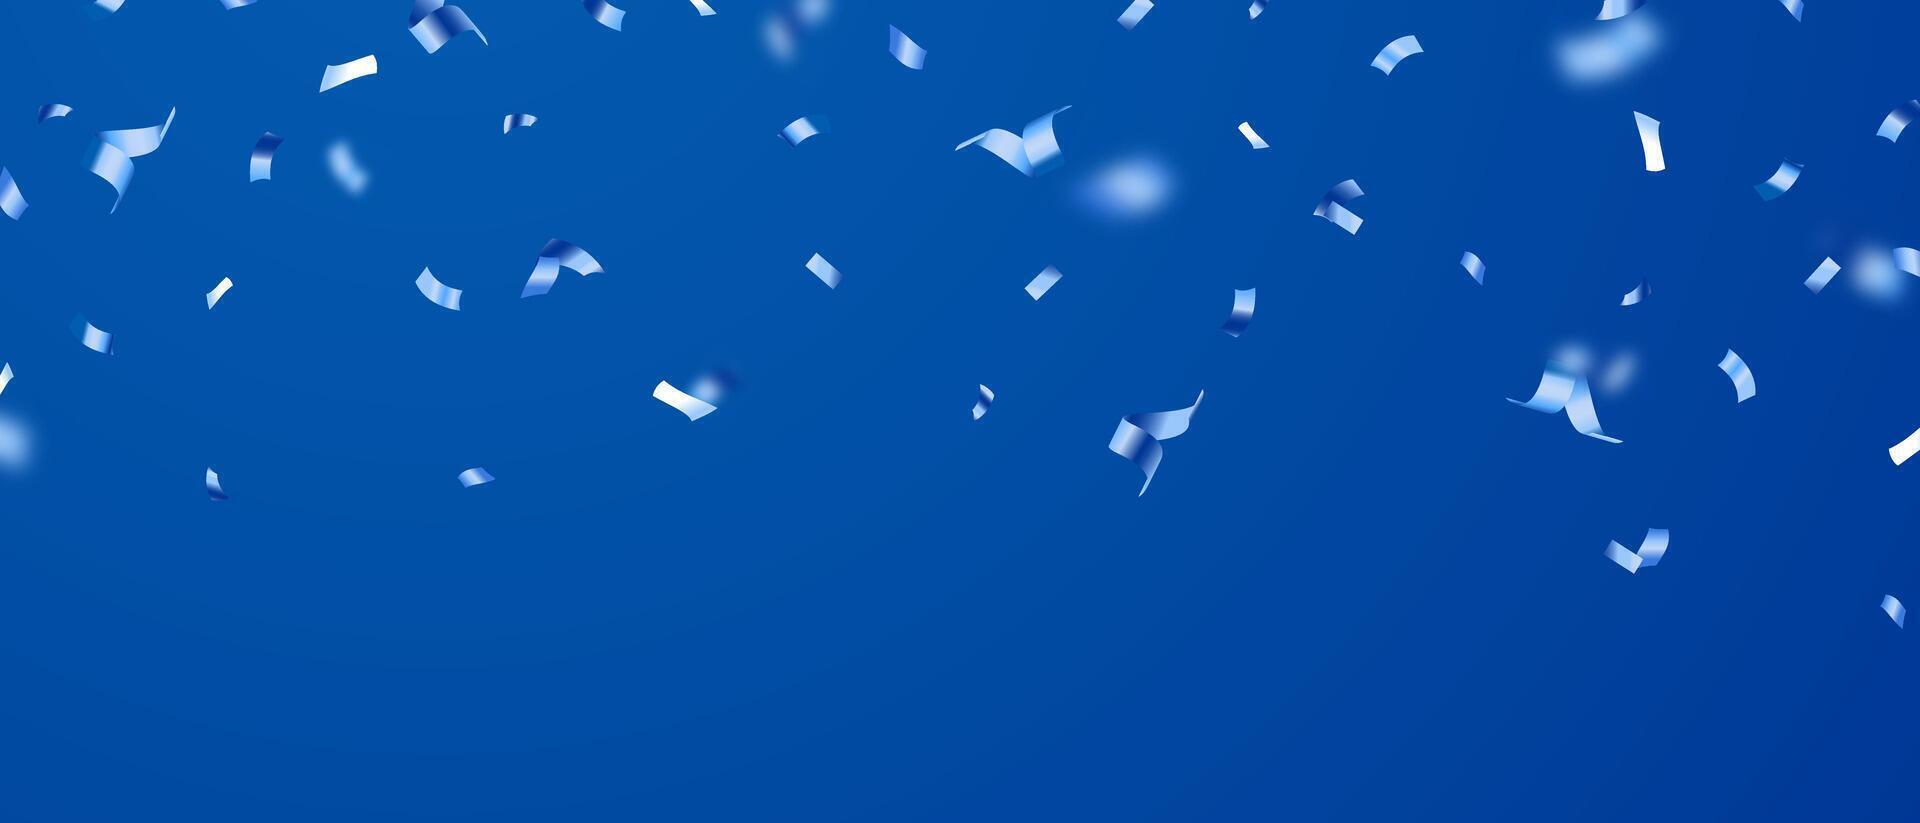 mooi blauw confetti achtergrond voor viering partij vector illustratie